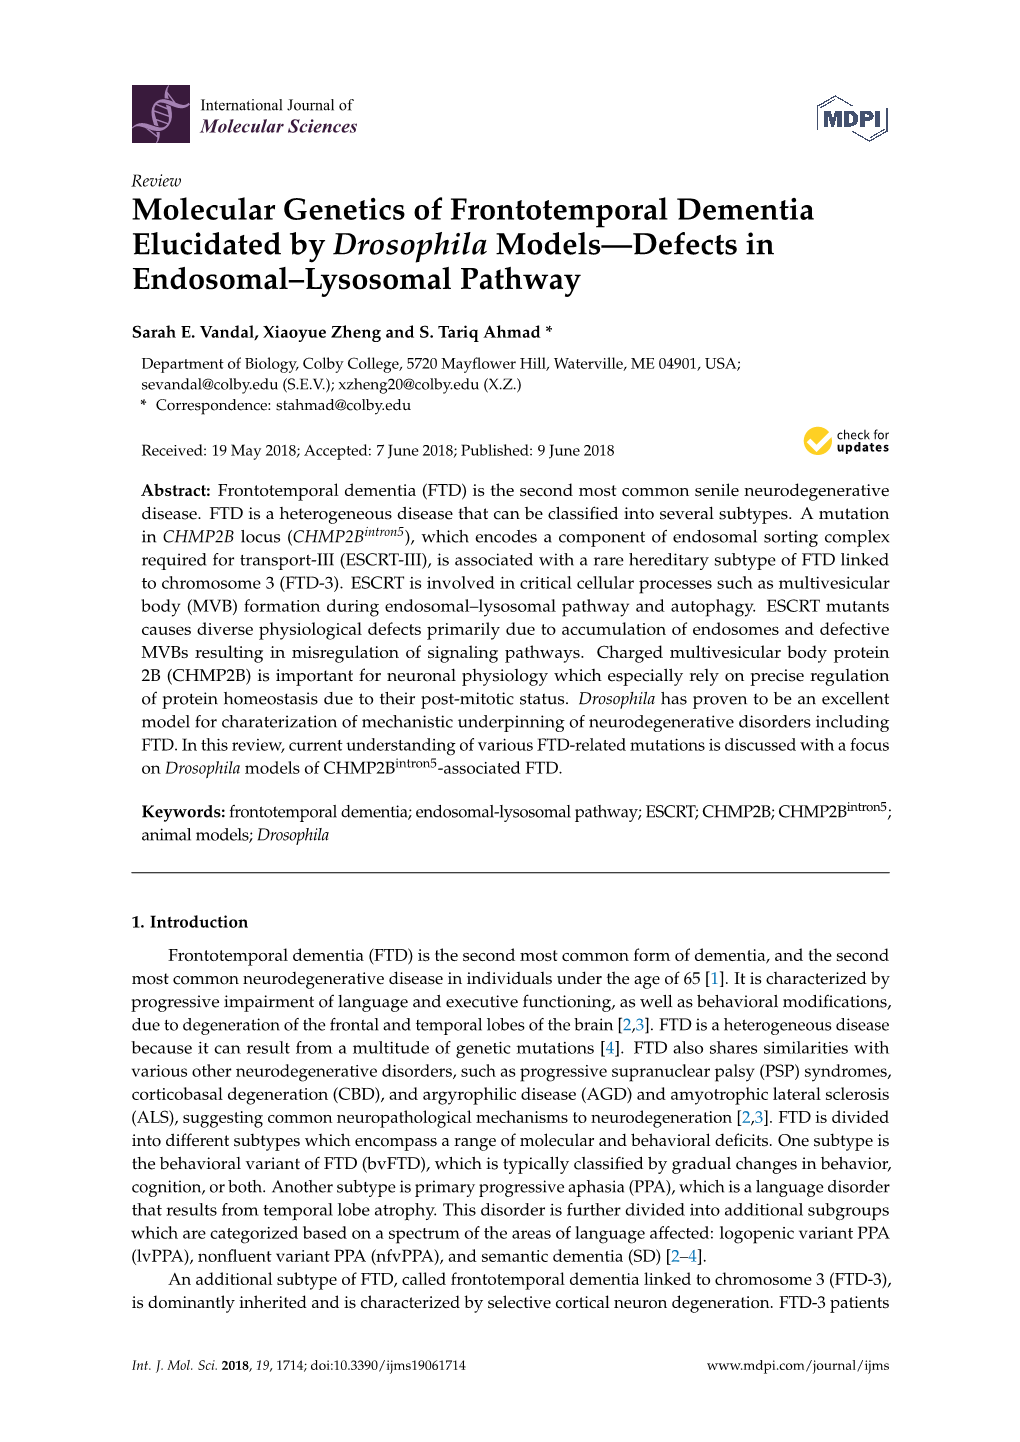 Molecular Genetics of Frontotemporal Dementia Elucidated by Drosophila Models—Defects in Endosomal–Lysosomal Pathway